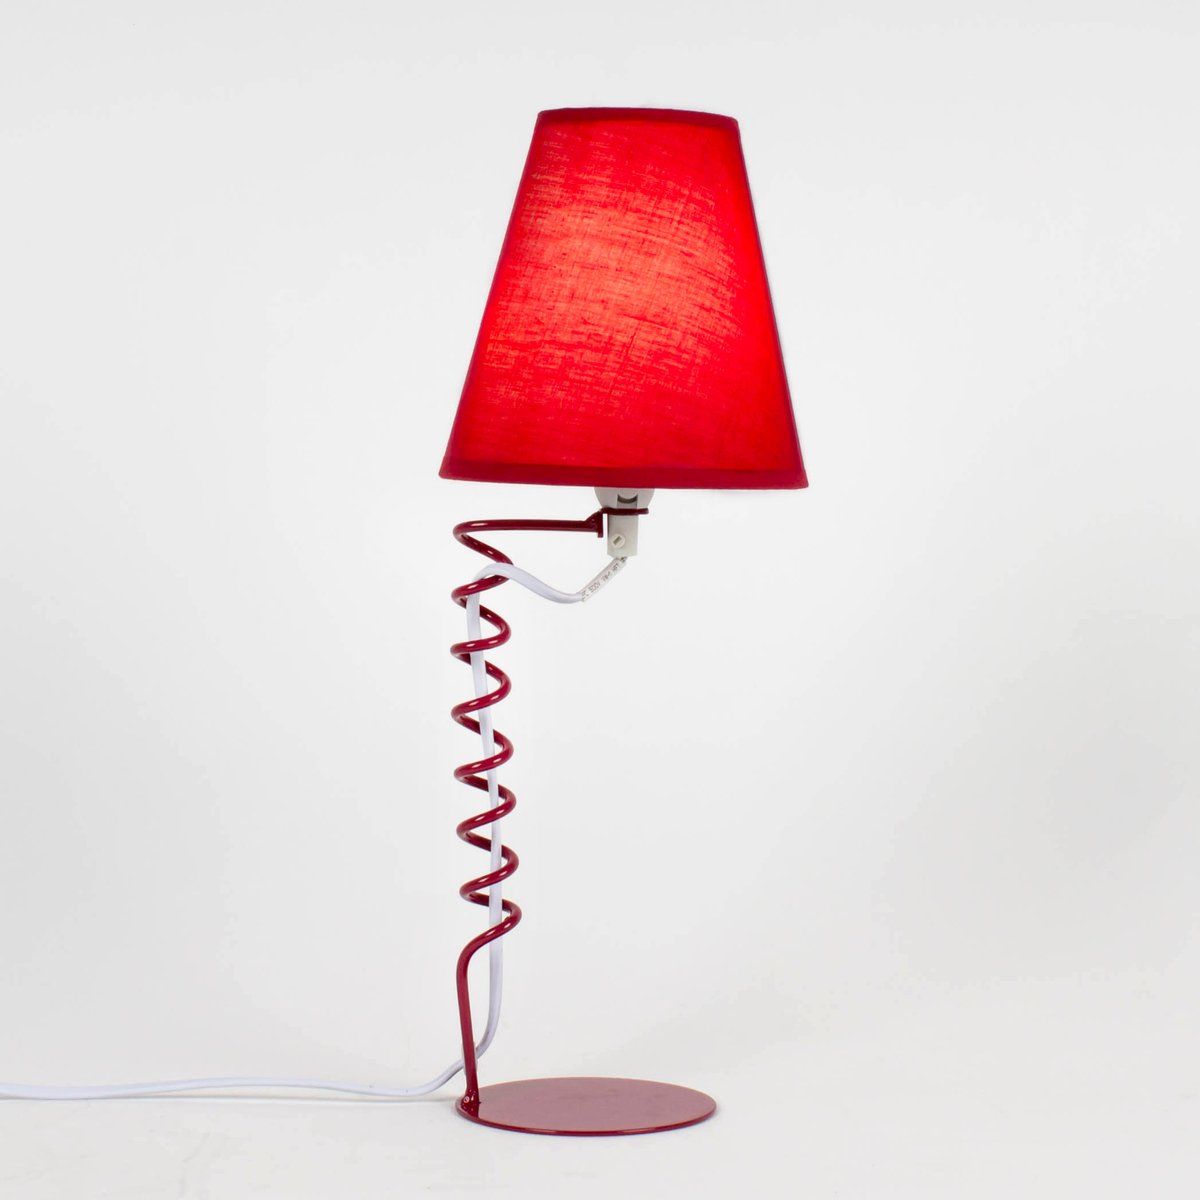 Lampe de table LOL rouge en métal